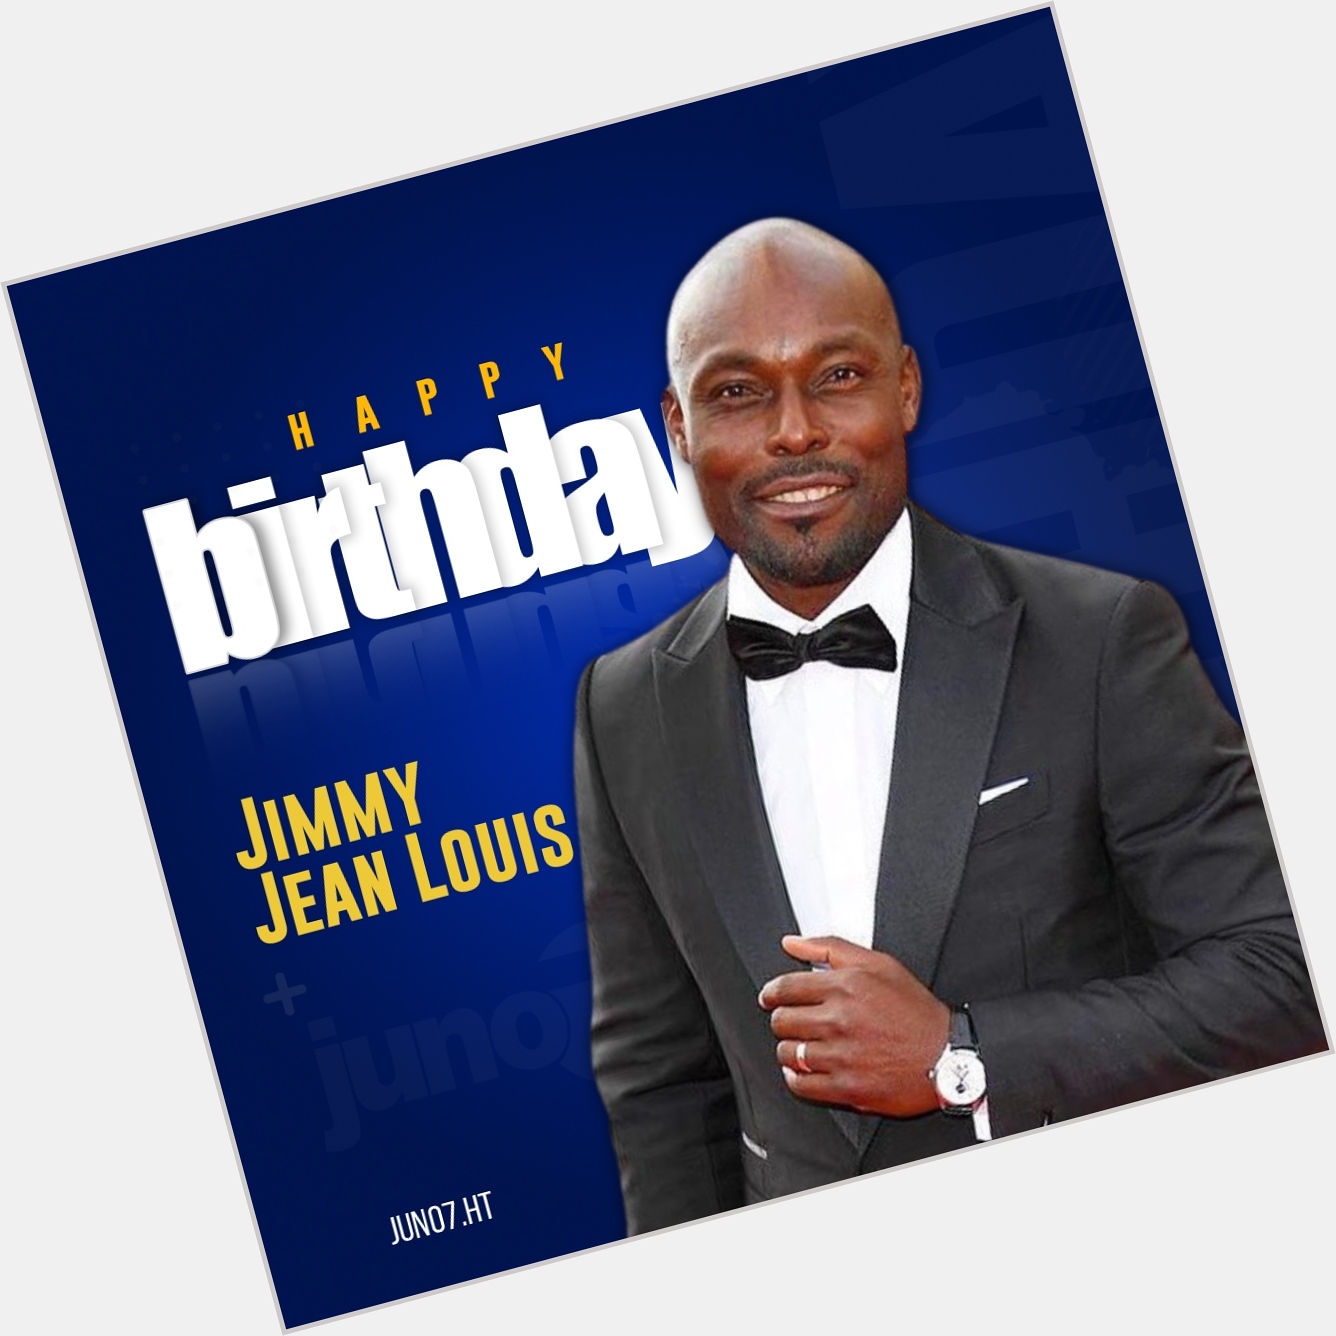 Happy birthday to Jimmy Jean Louis (HaitianHero).-  